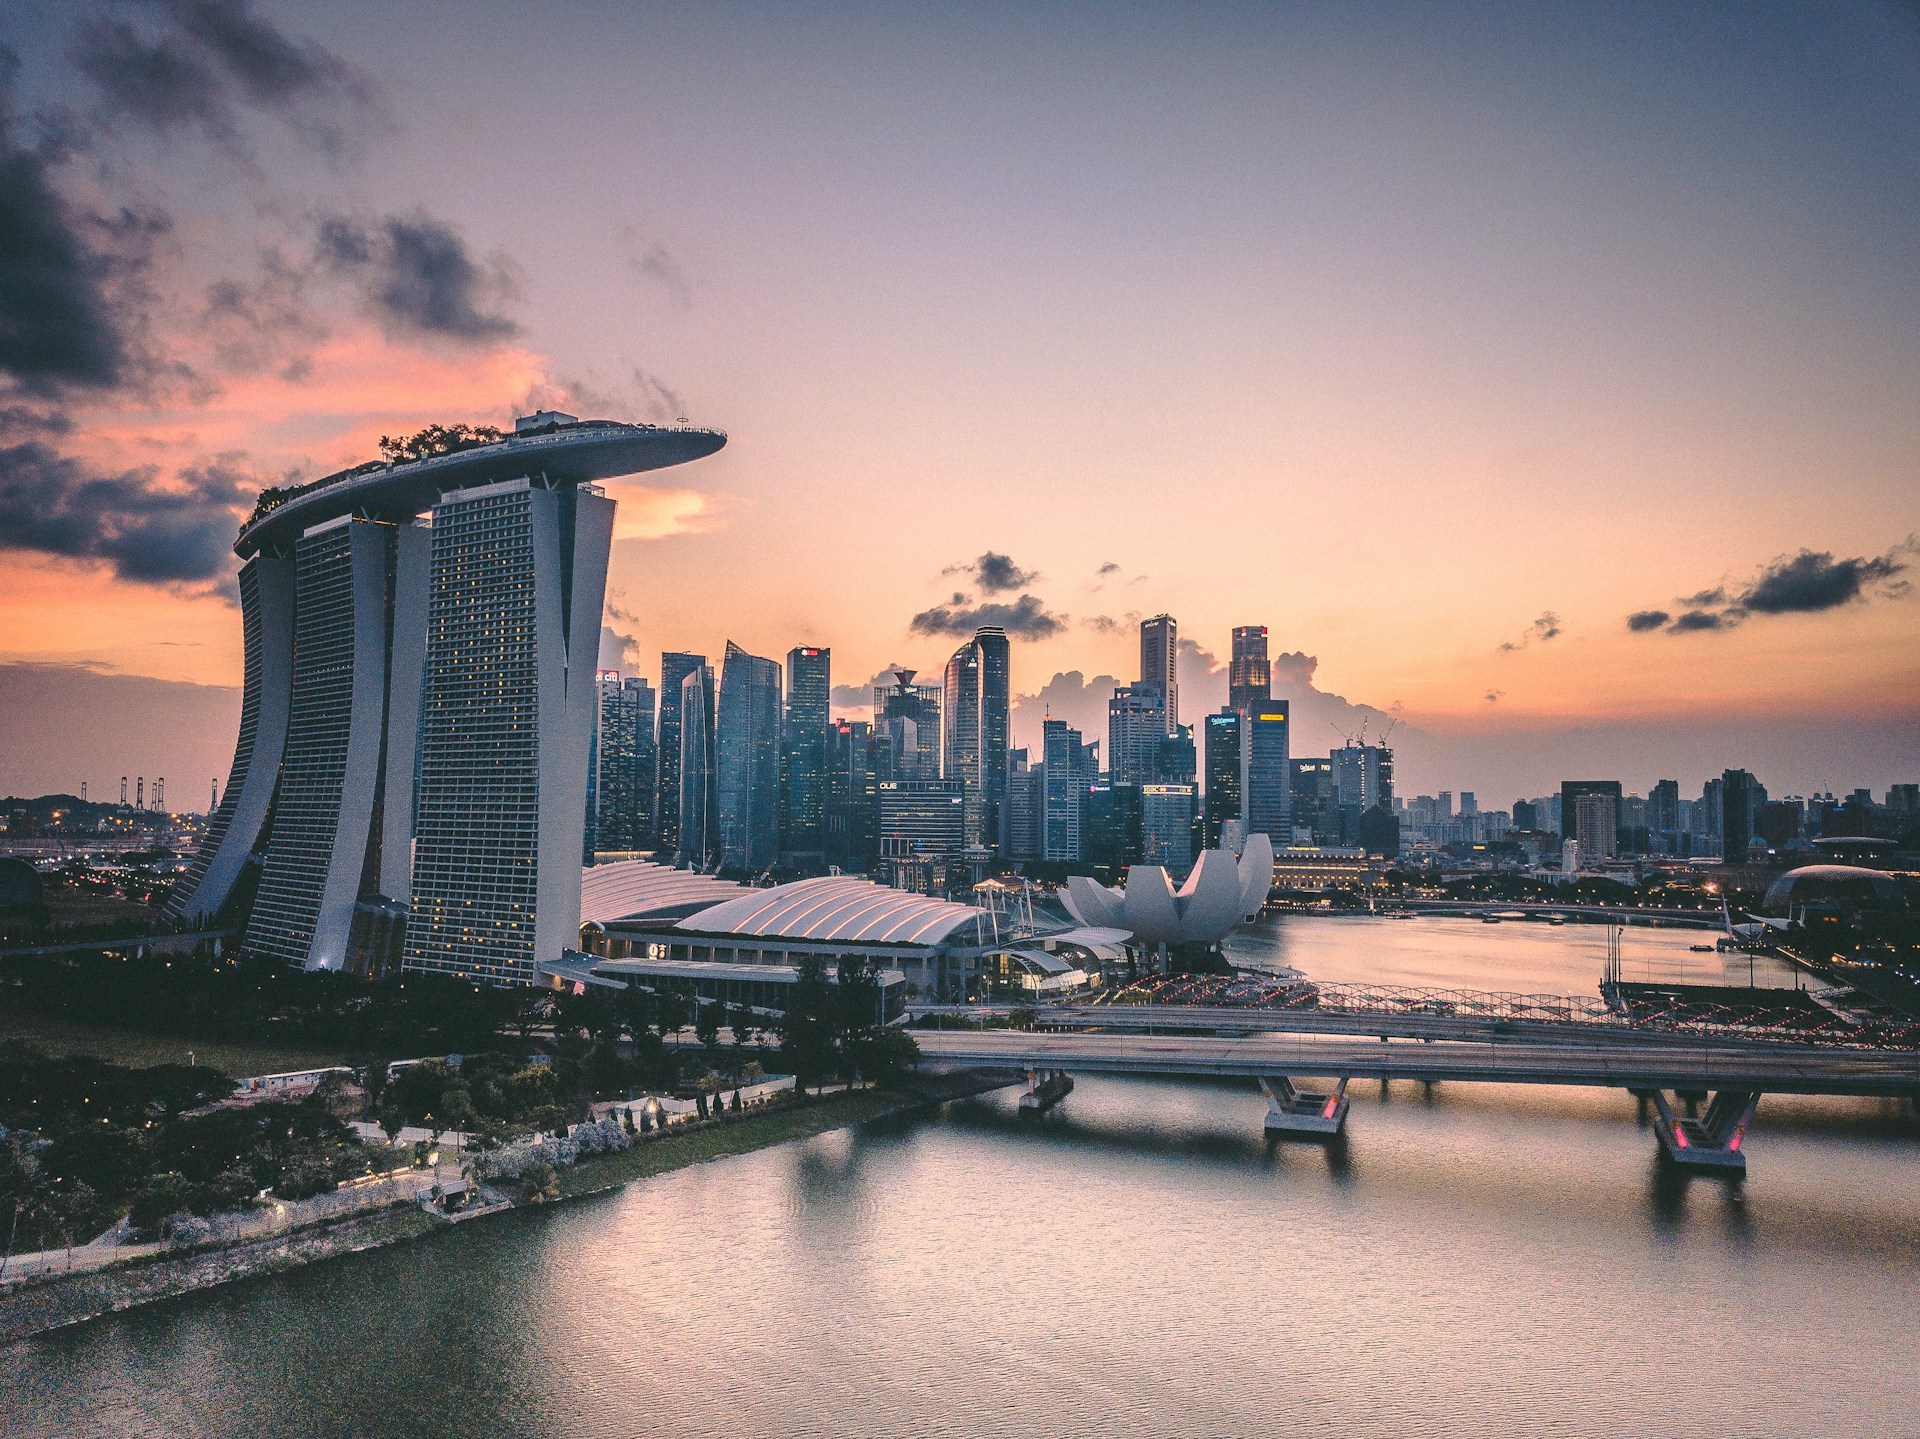 Singapore to Trial Digital Ship Identity Passes